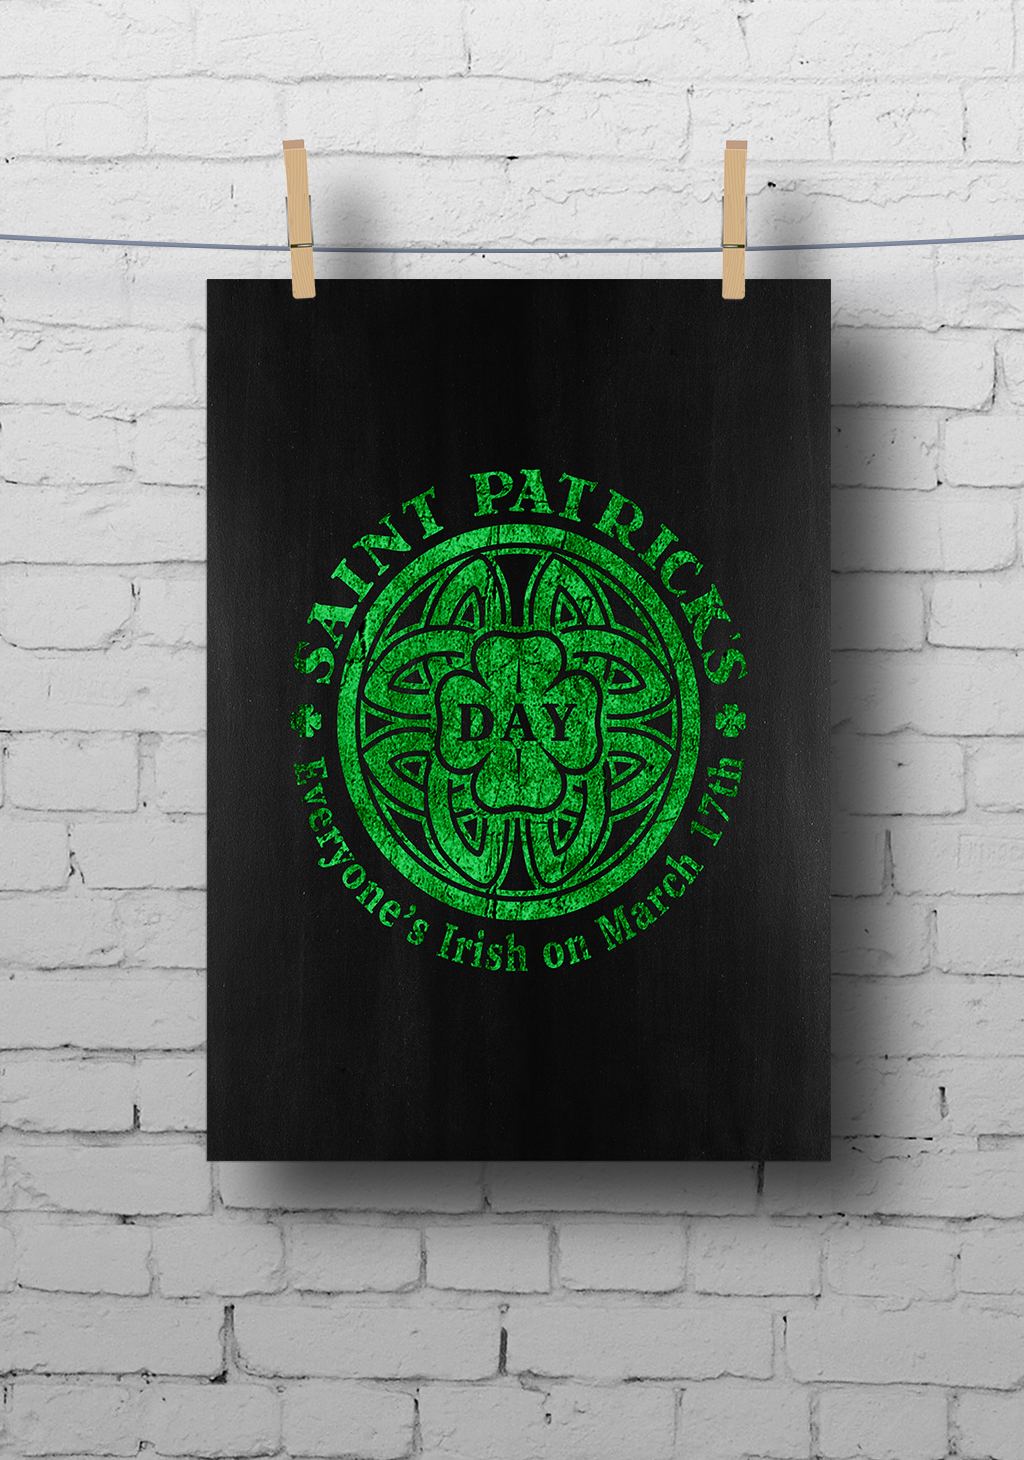 Free Printable Wall Art - St. Patrick's Day